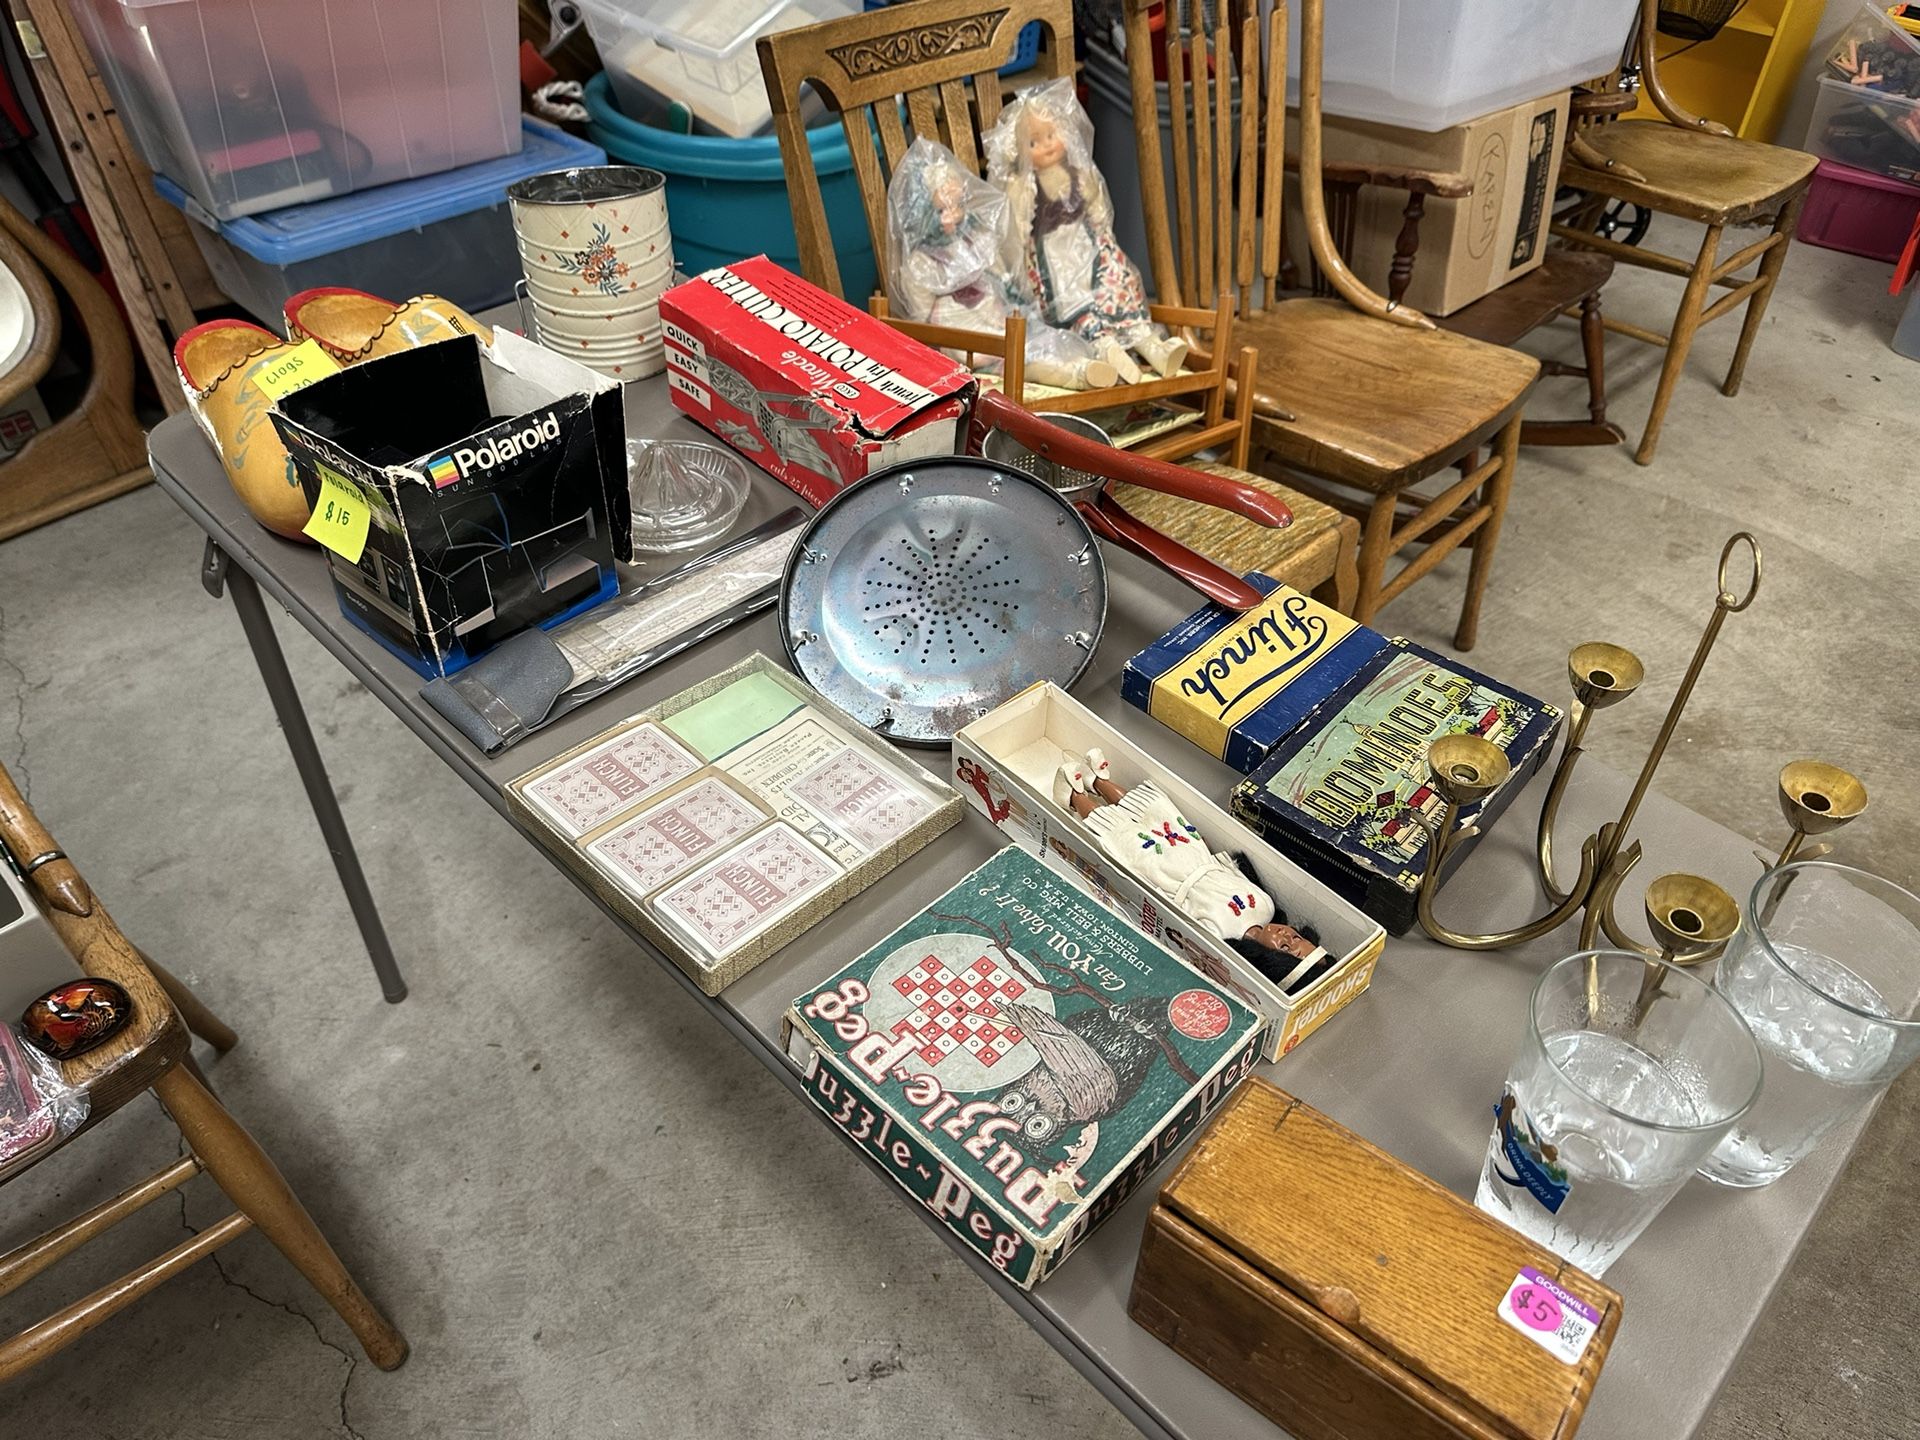 antique kitchen items + board games